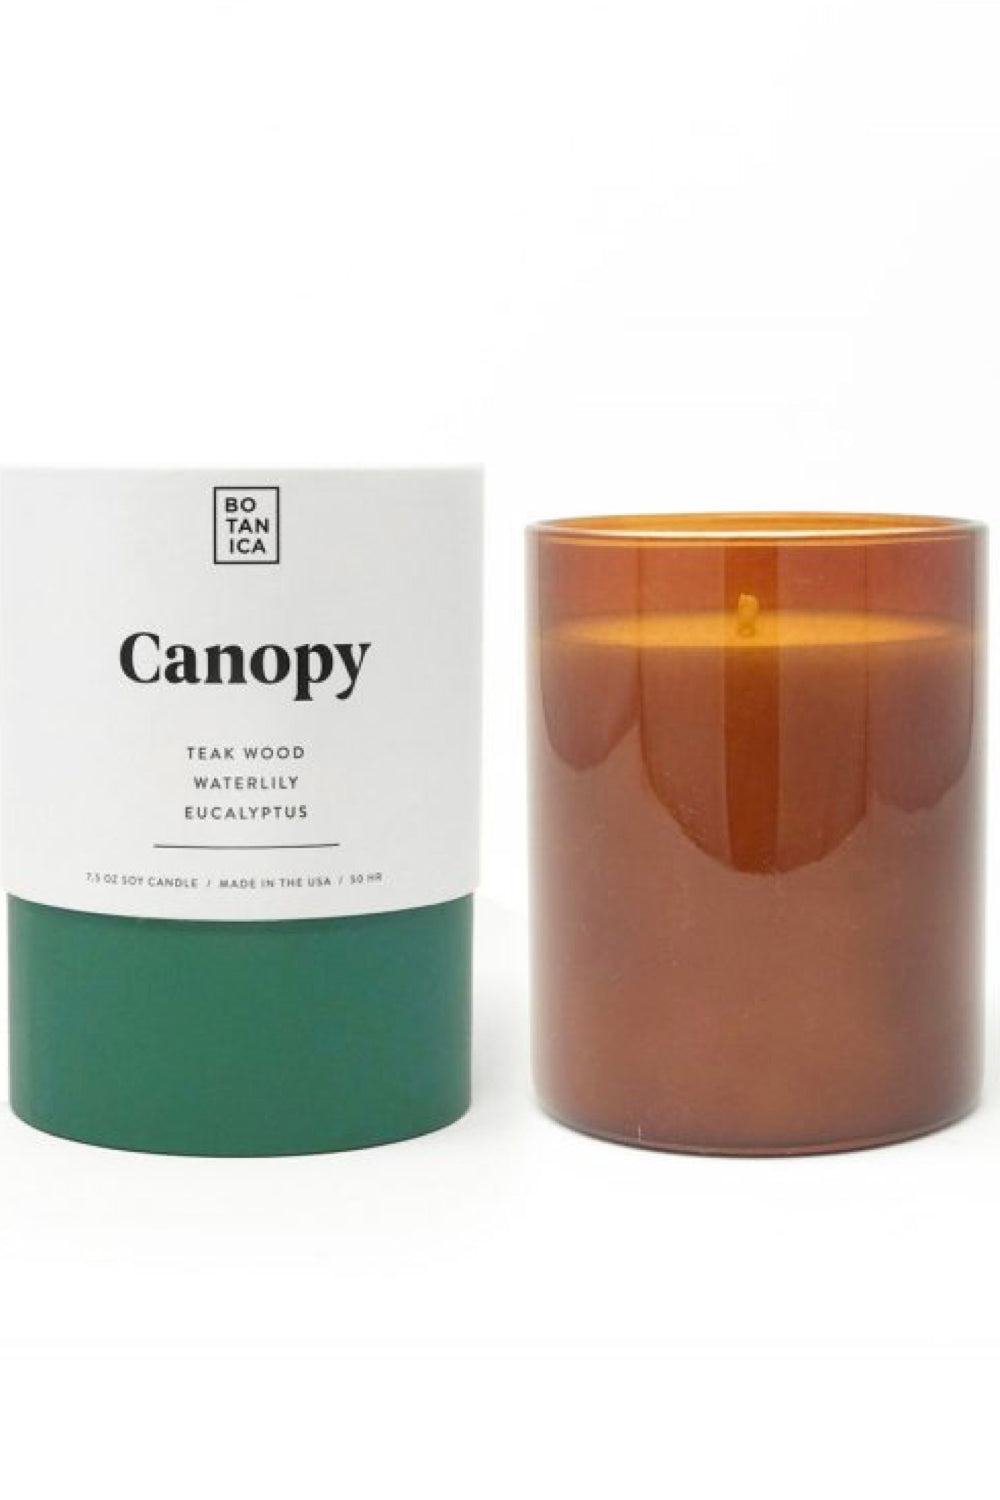 Botanica Medium Candle Canopy